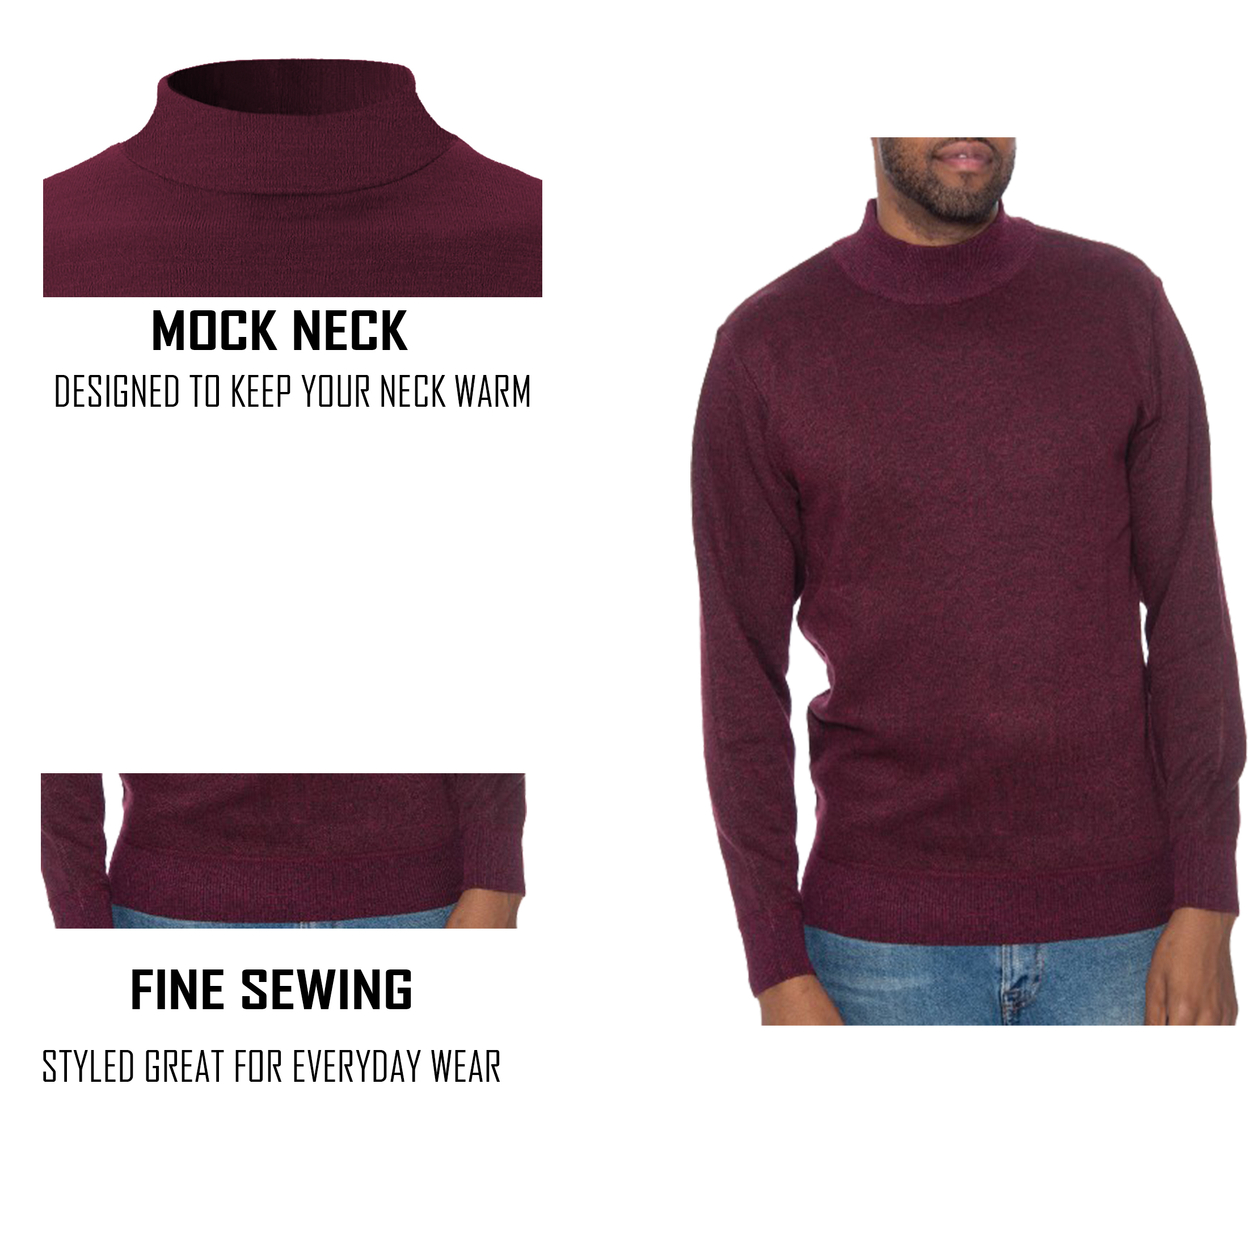 2-Pack: Men's Winter Warm Cozy Knit Slim Fit Mock Neck Sweater - Black & Navy, Medium